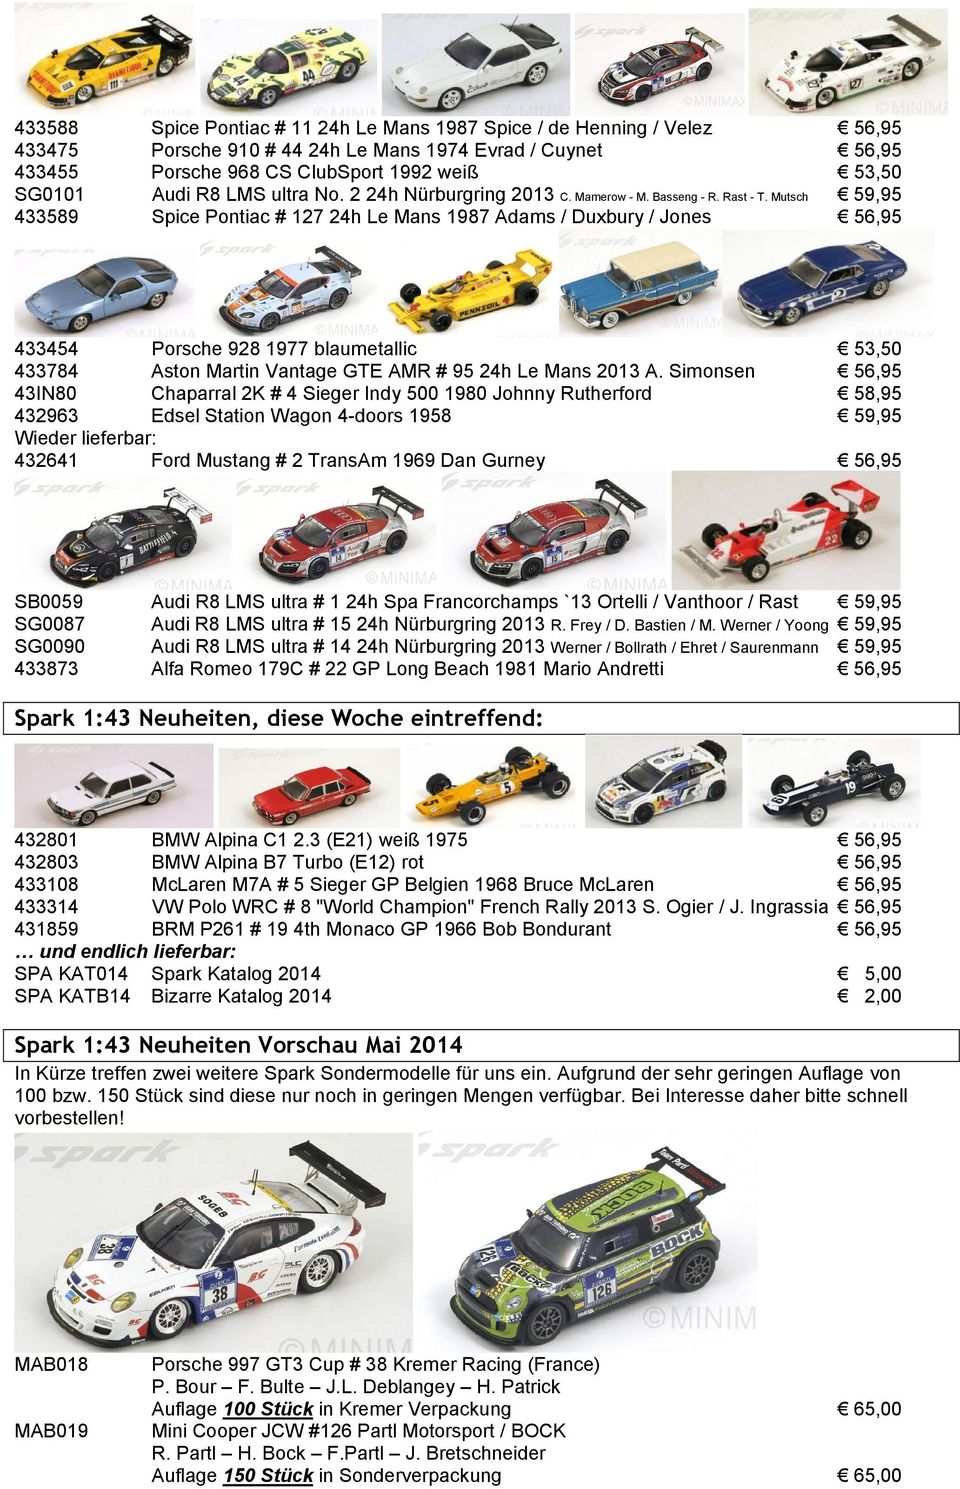 Mutsch 59,95 433589 Spice Pontiac # 127 24h Le Mans 1987 Adams / Duxbury / Jones 56,95 433454 Porsche 928 1977 blaumetallic 53,50 433784 Aston Martin Vantage GTE AMR # 95 24h Le Mans 2013 A.